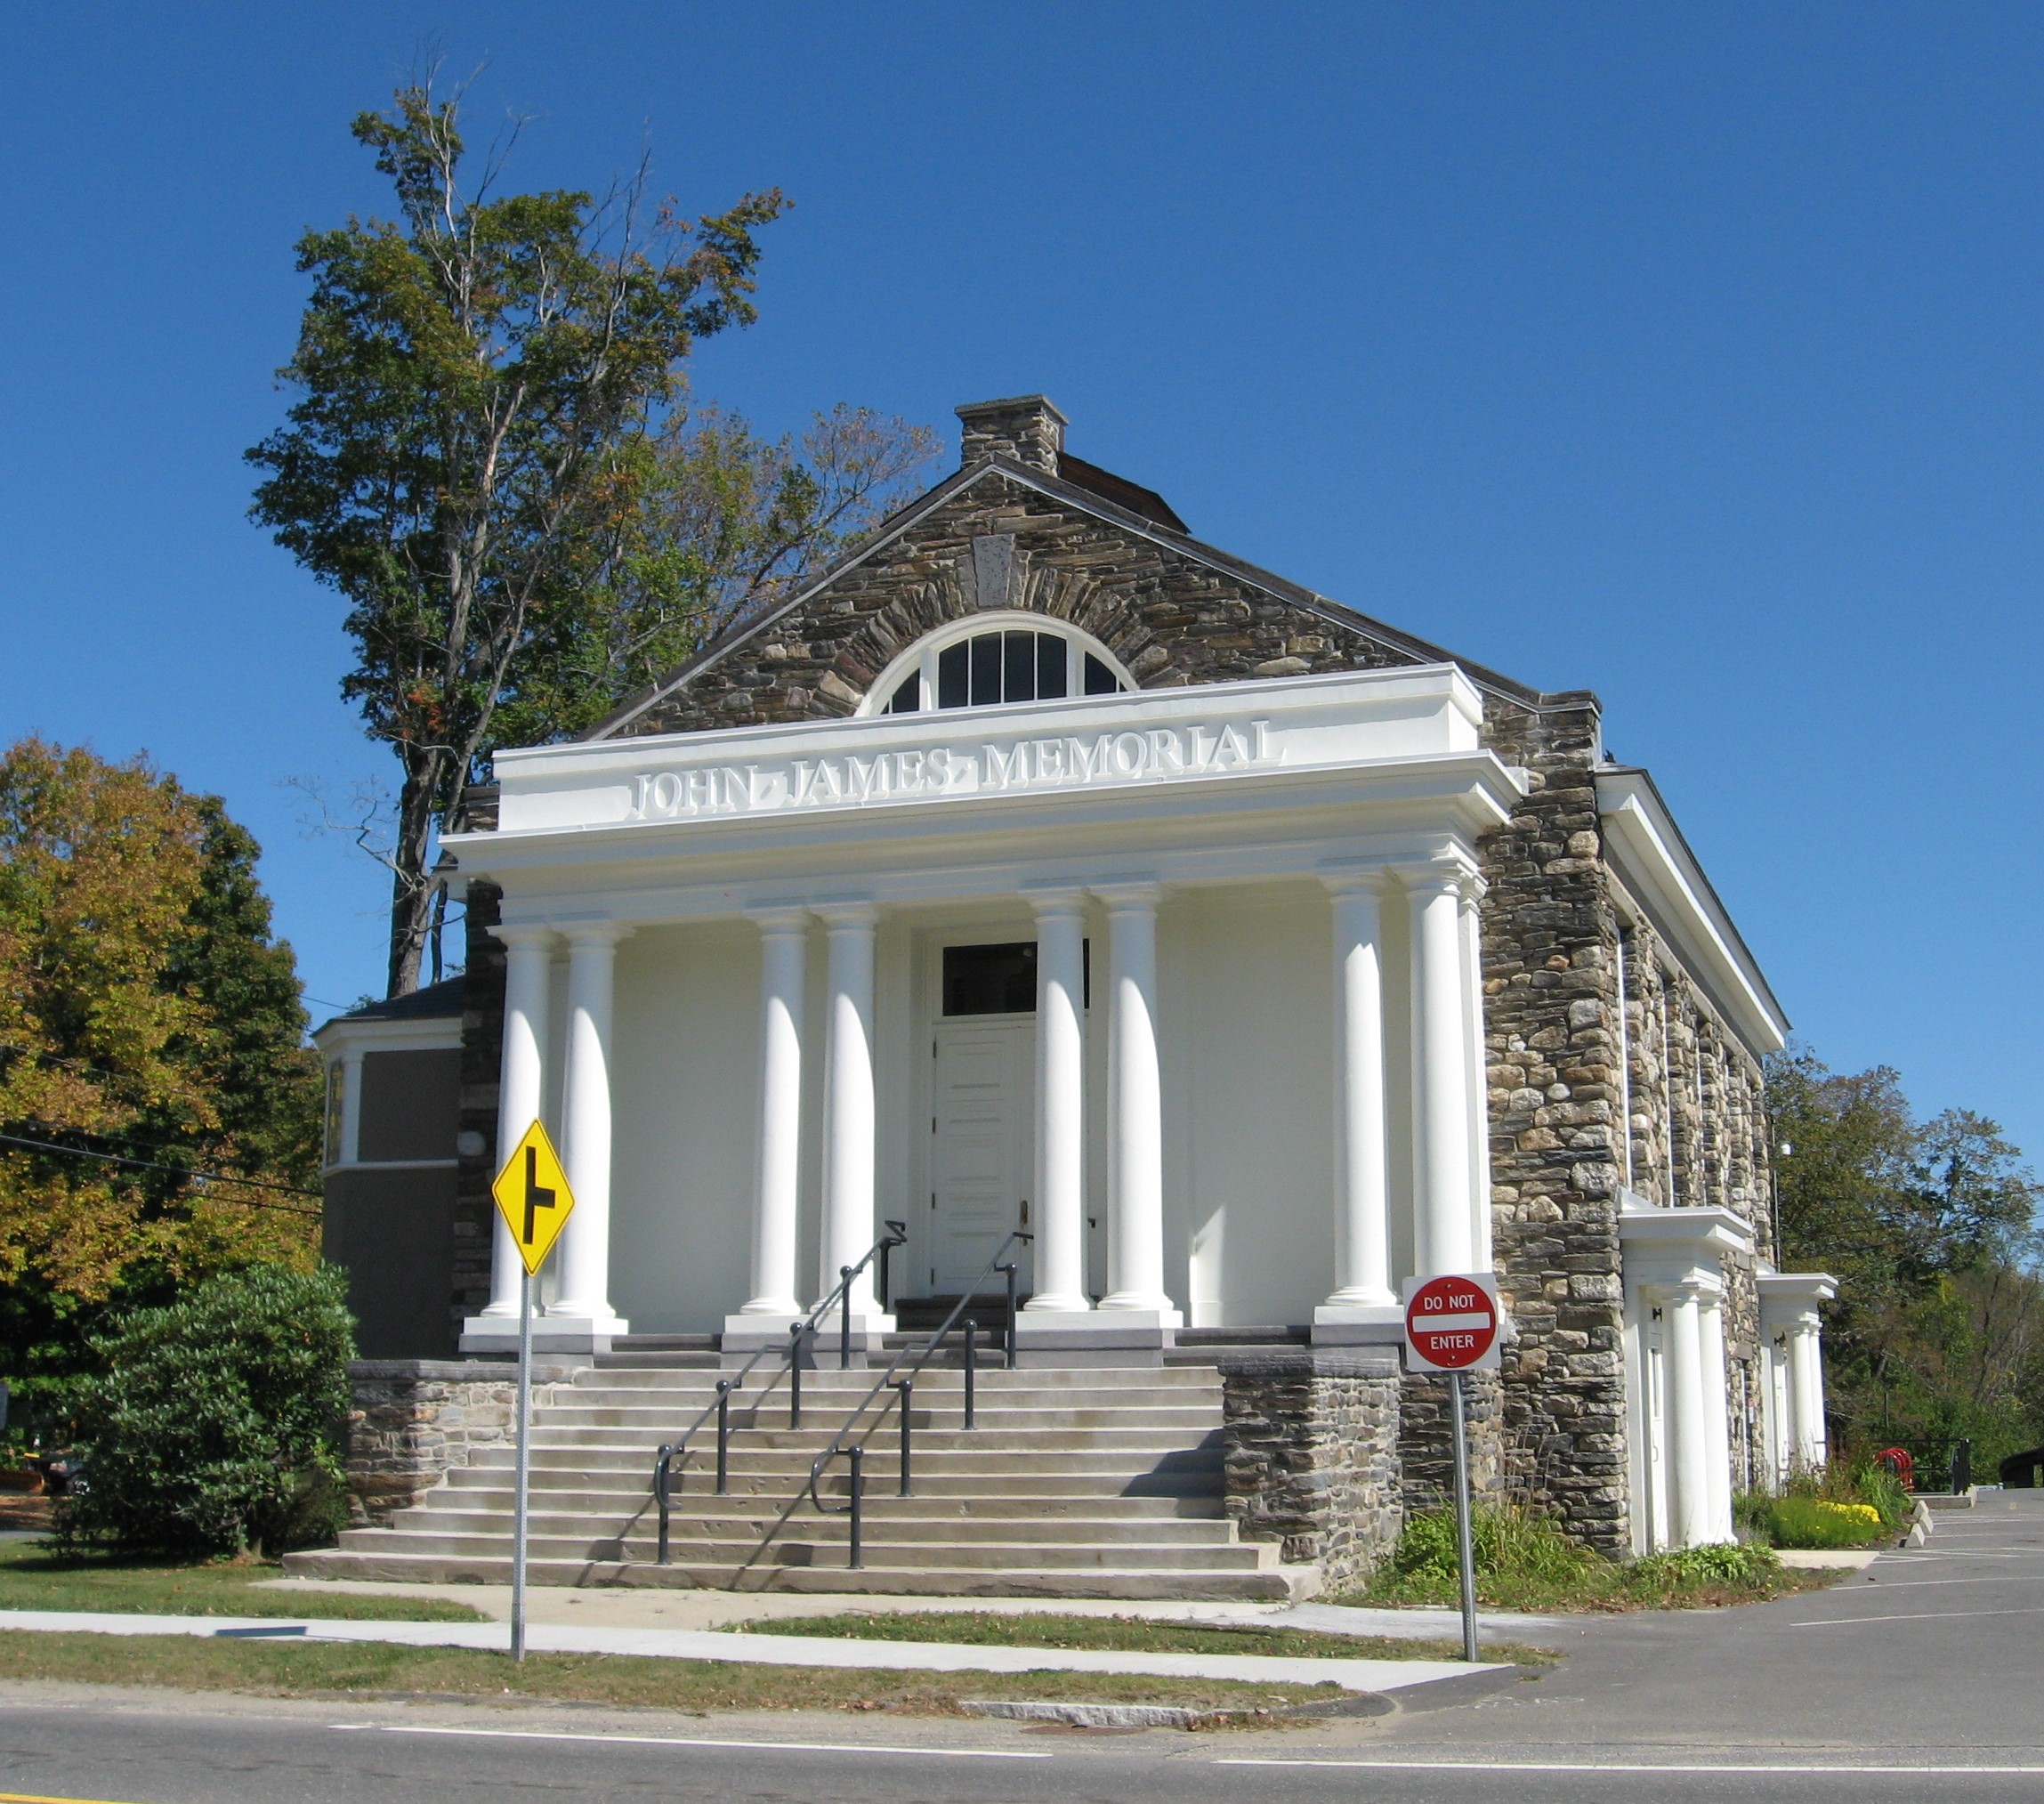 John James Memorial Town Hall